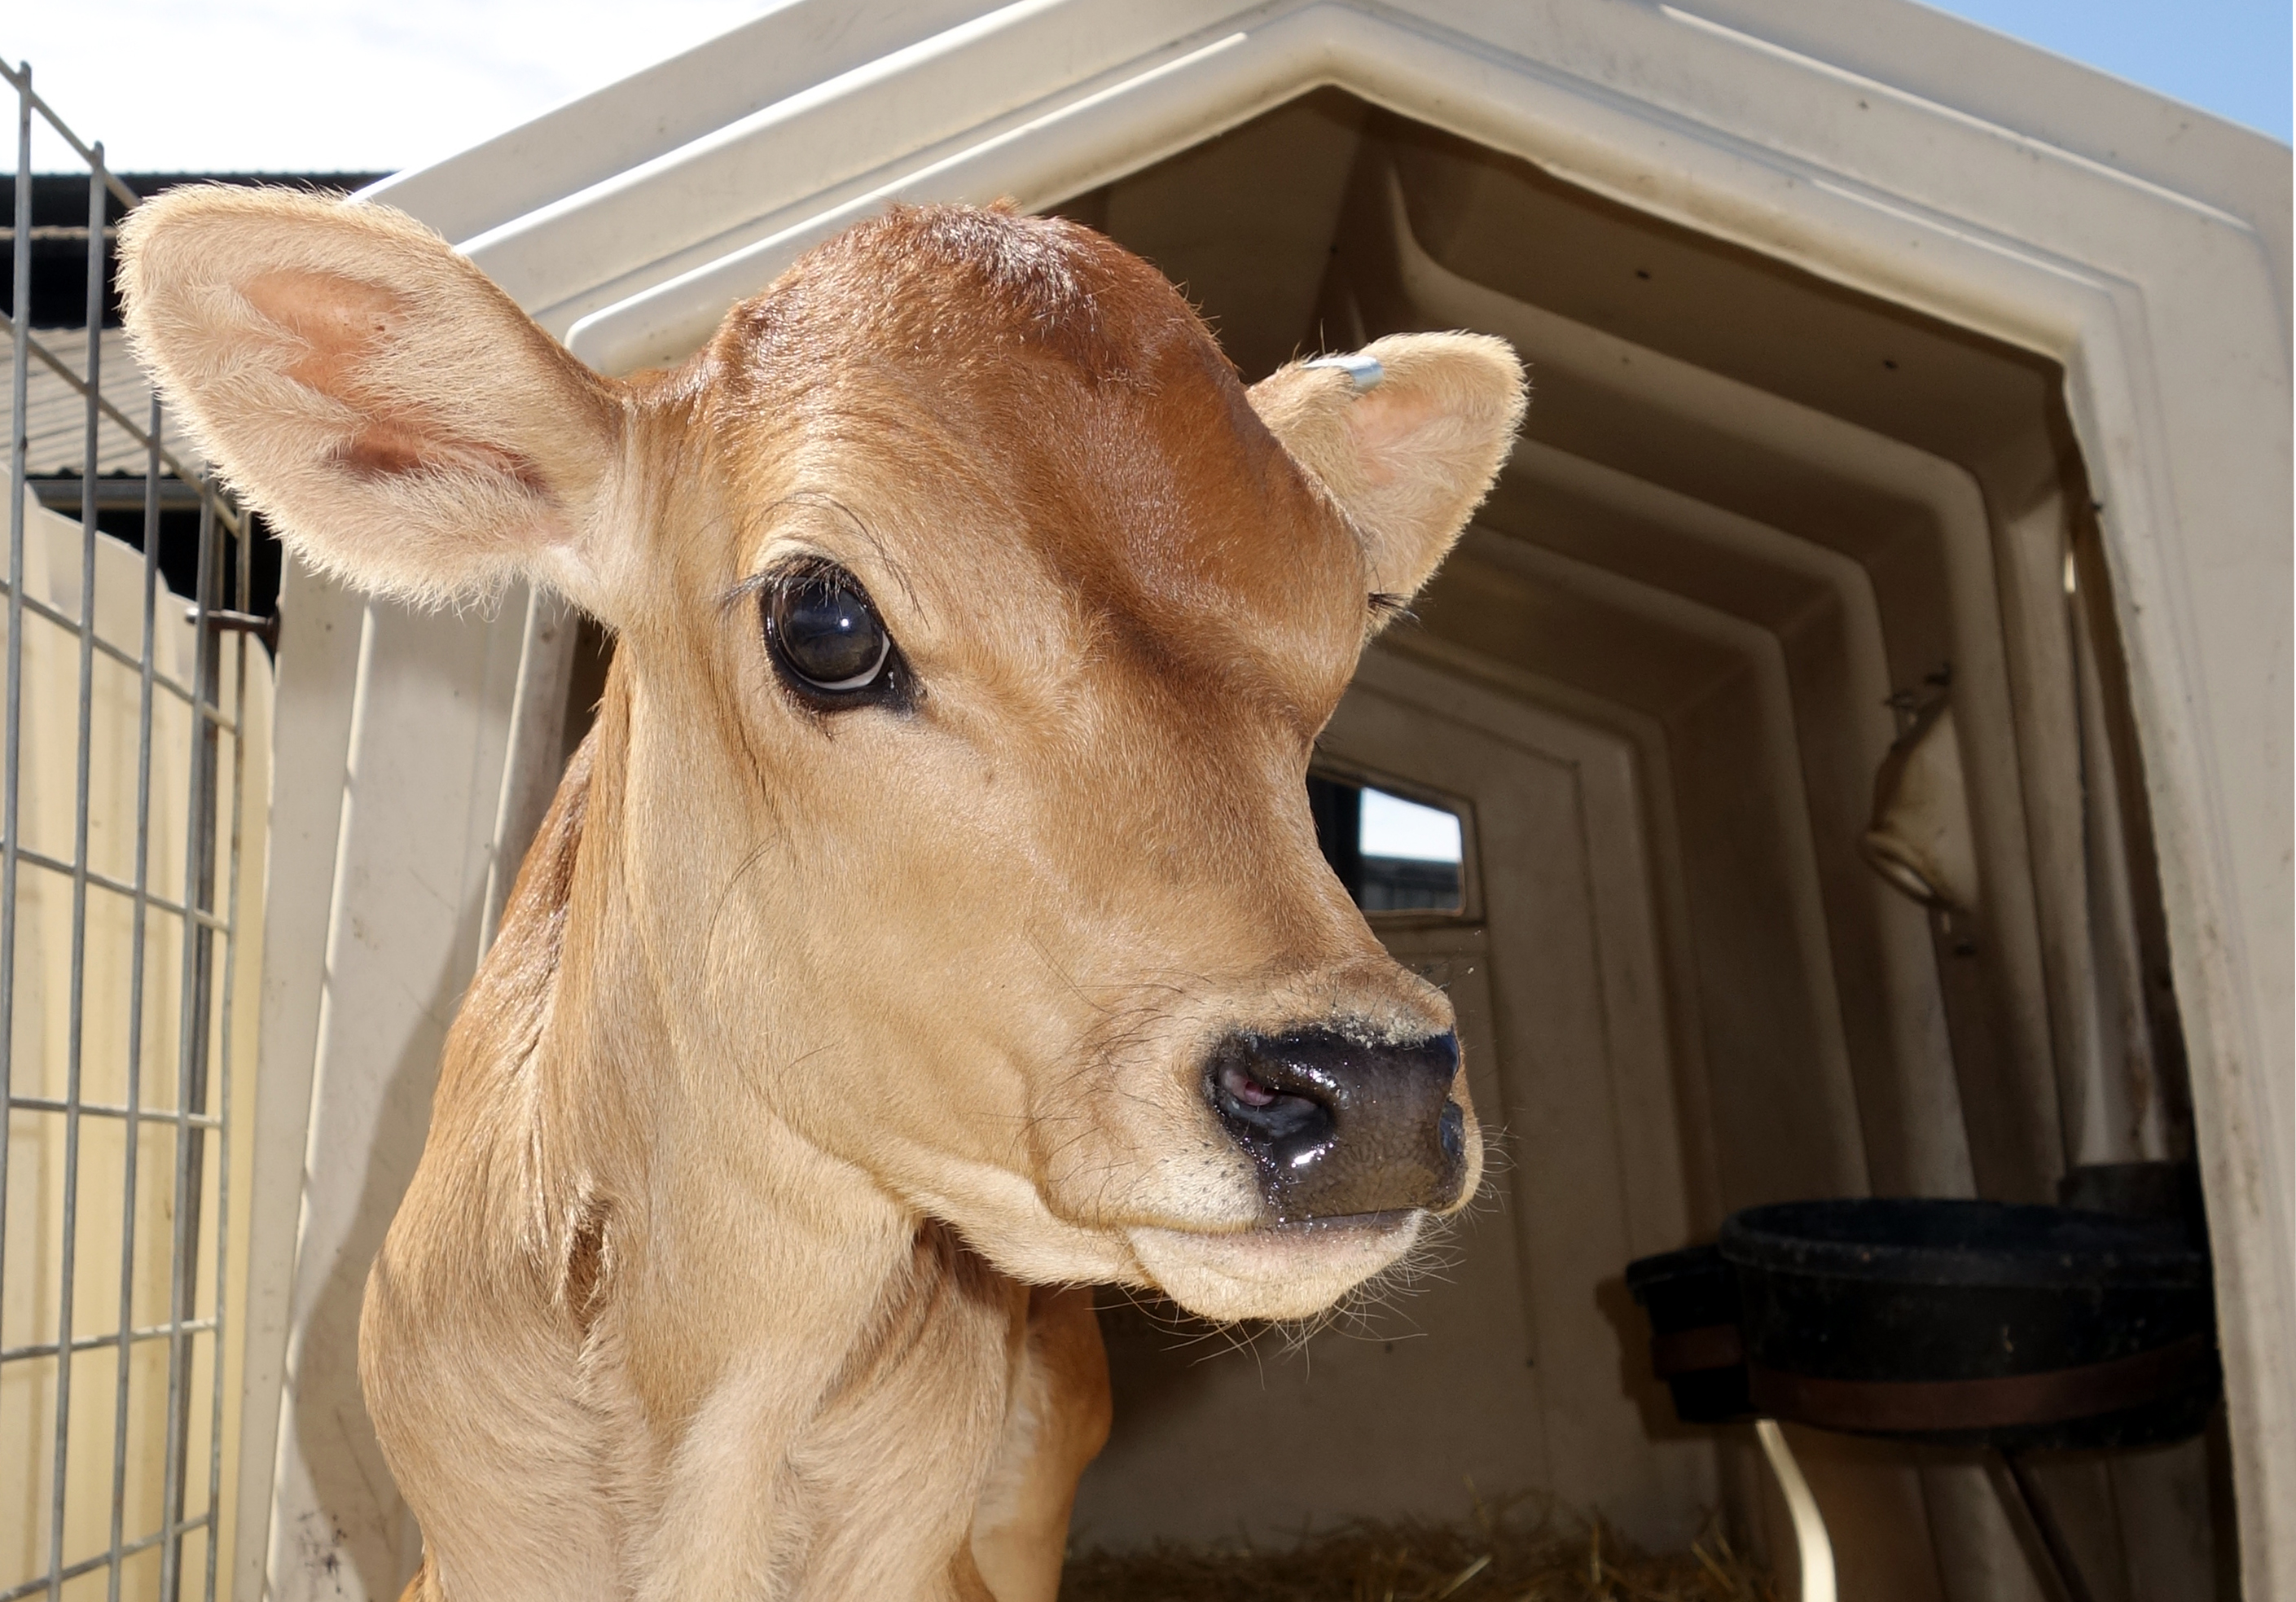 A young calf standing outside a calf igloo.